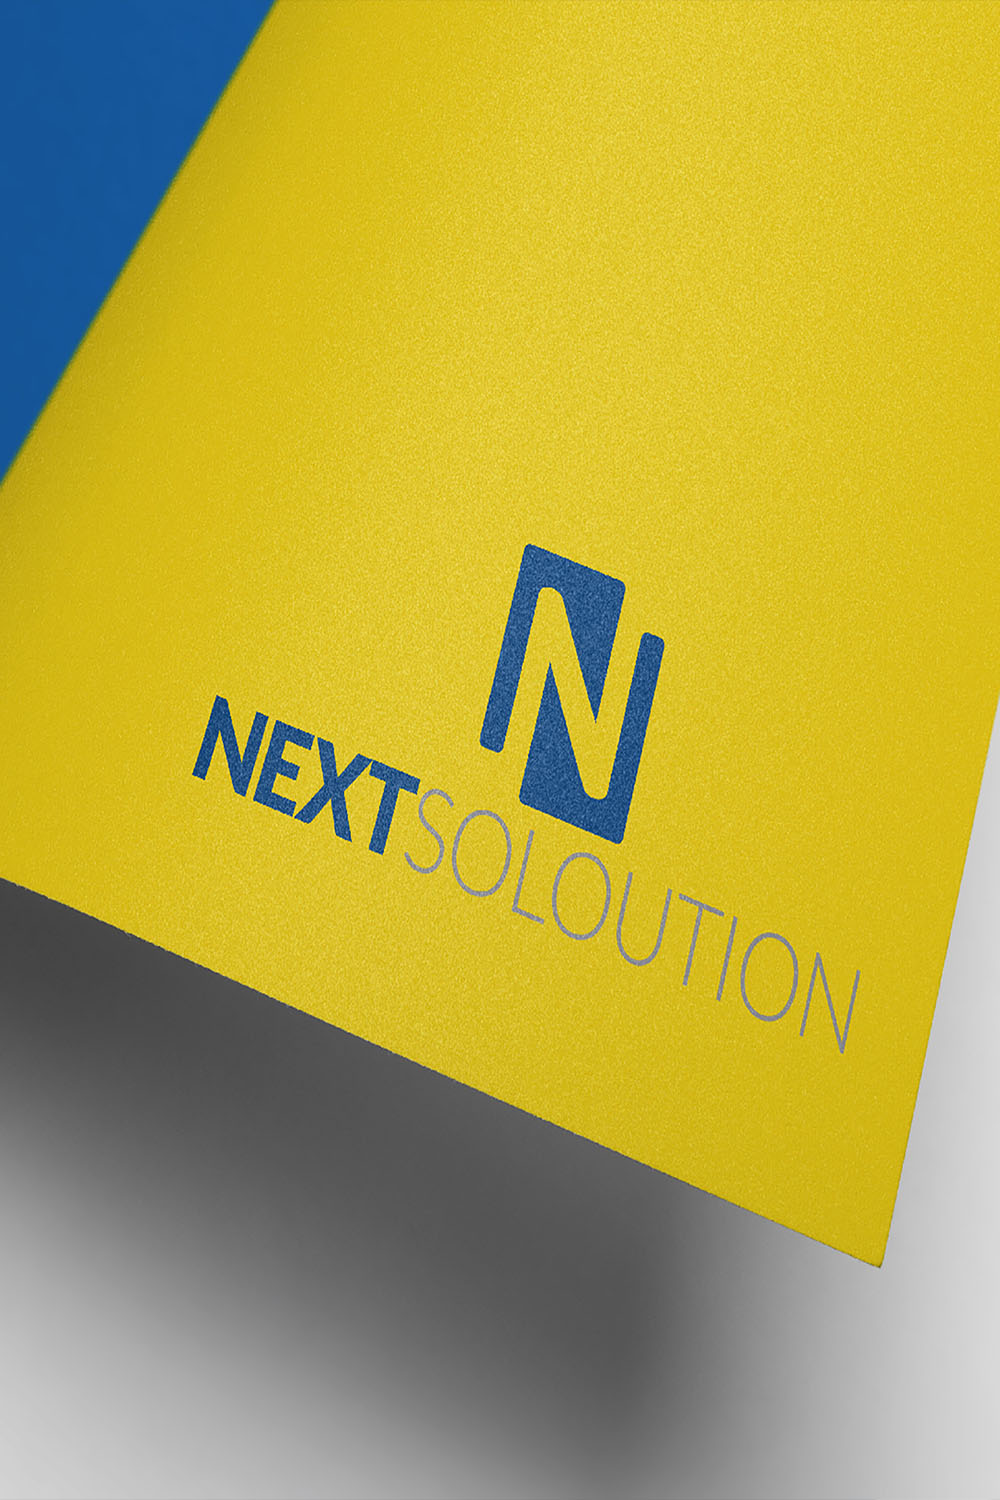 Simple Next Solution Logo Design pinterest image.